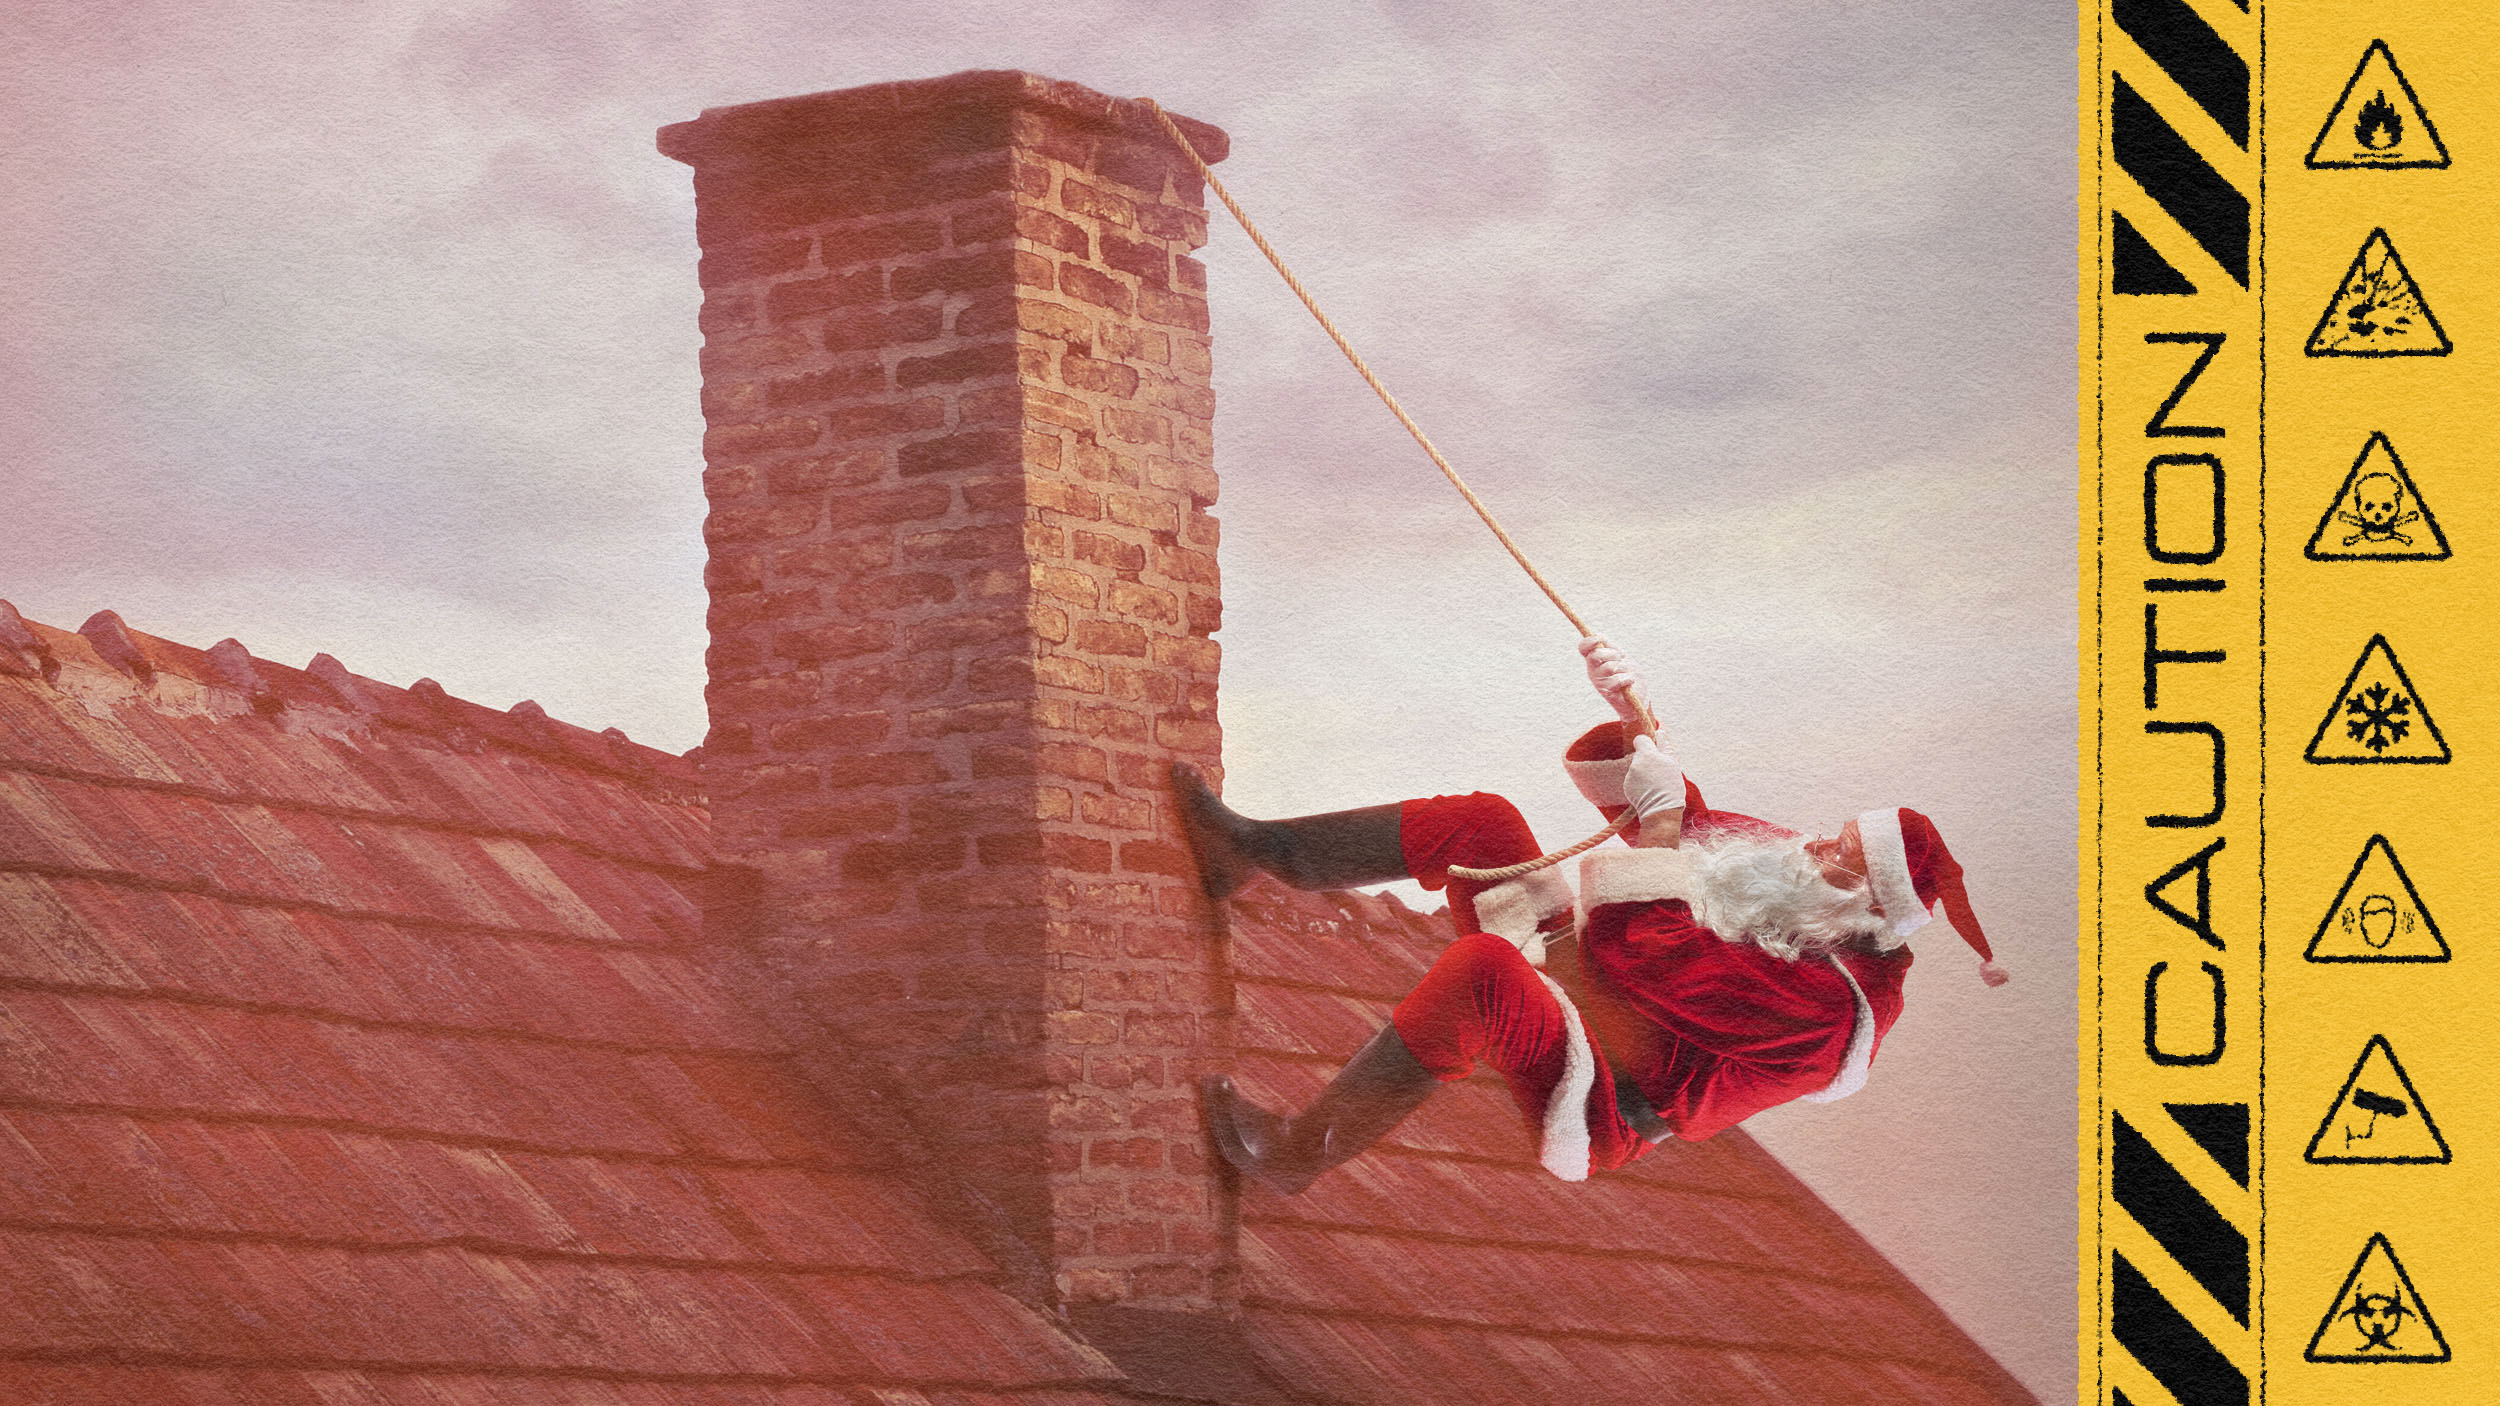 Santa Claus hanging from a hazardous chimney.